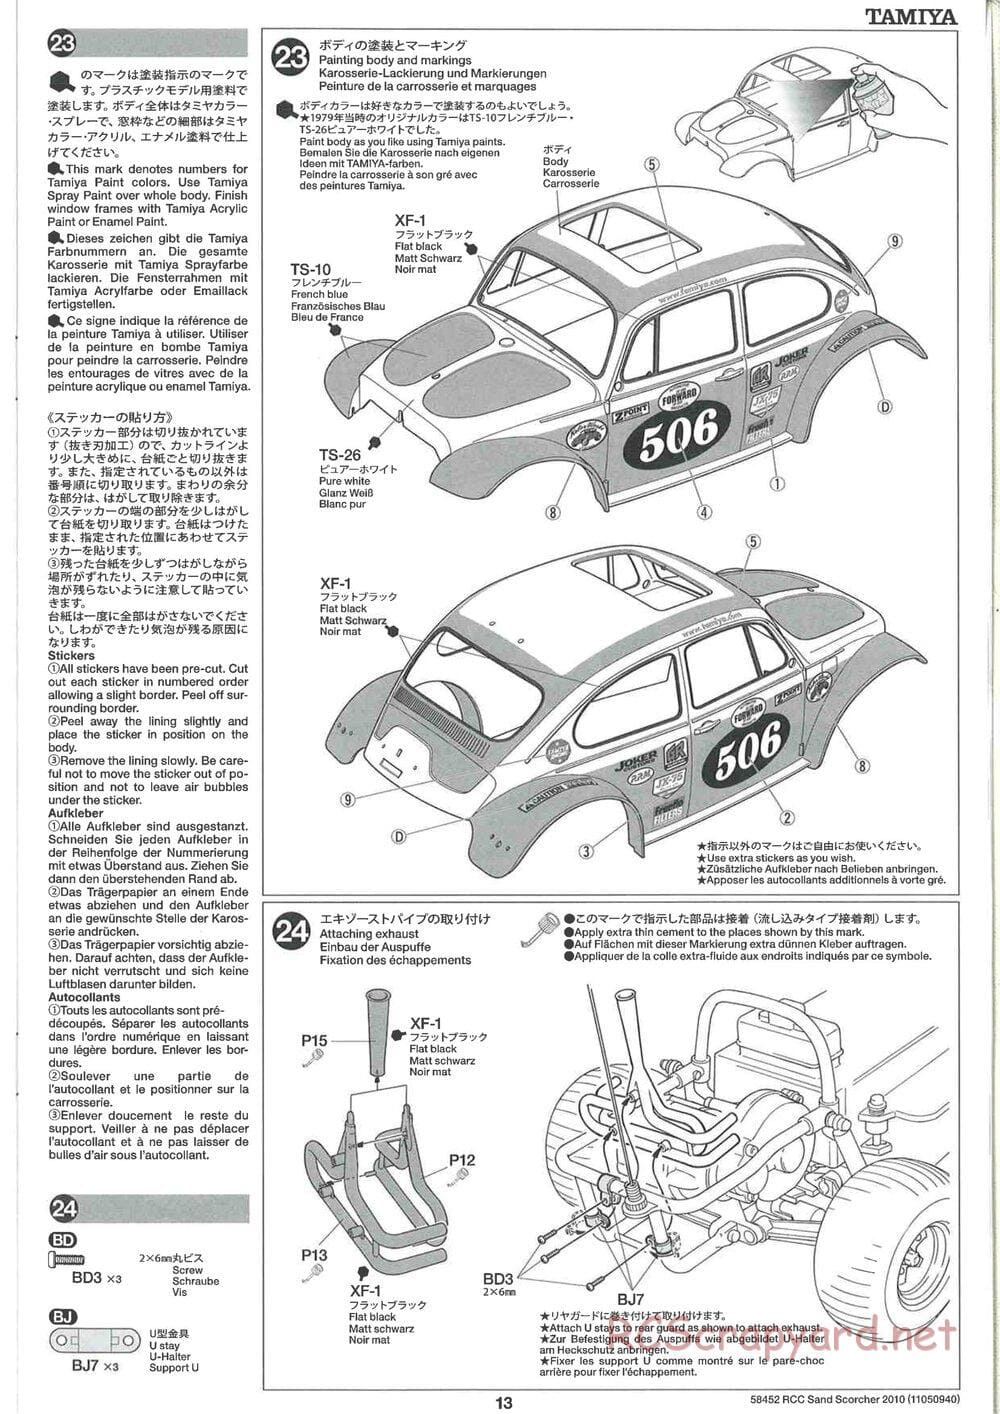 Tamiya - Sand Scorcher 2010 - SRB v1 Chassis - Manual - Page 13